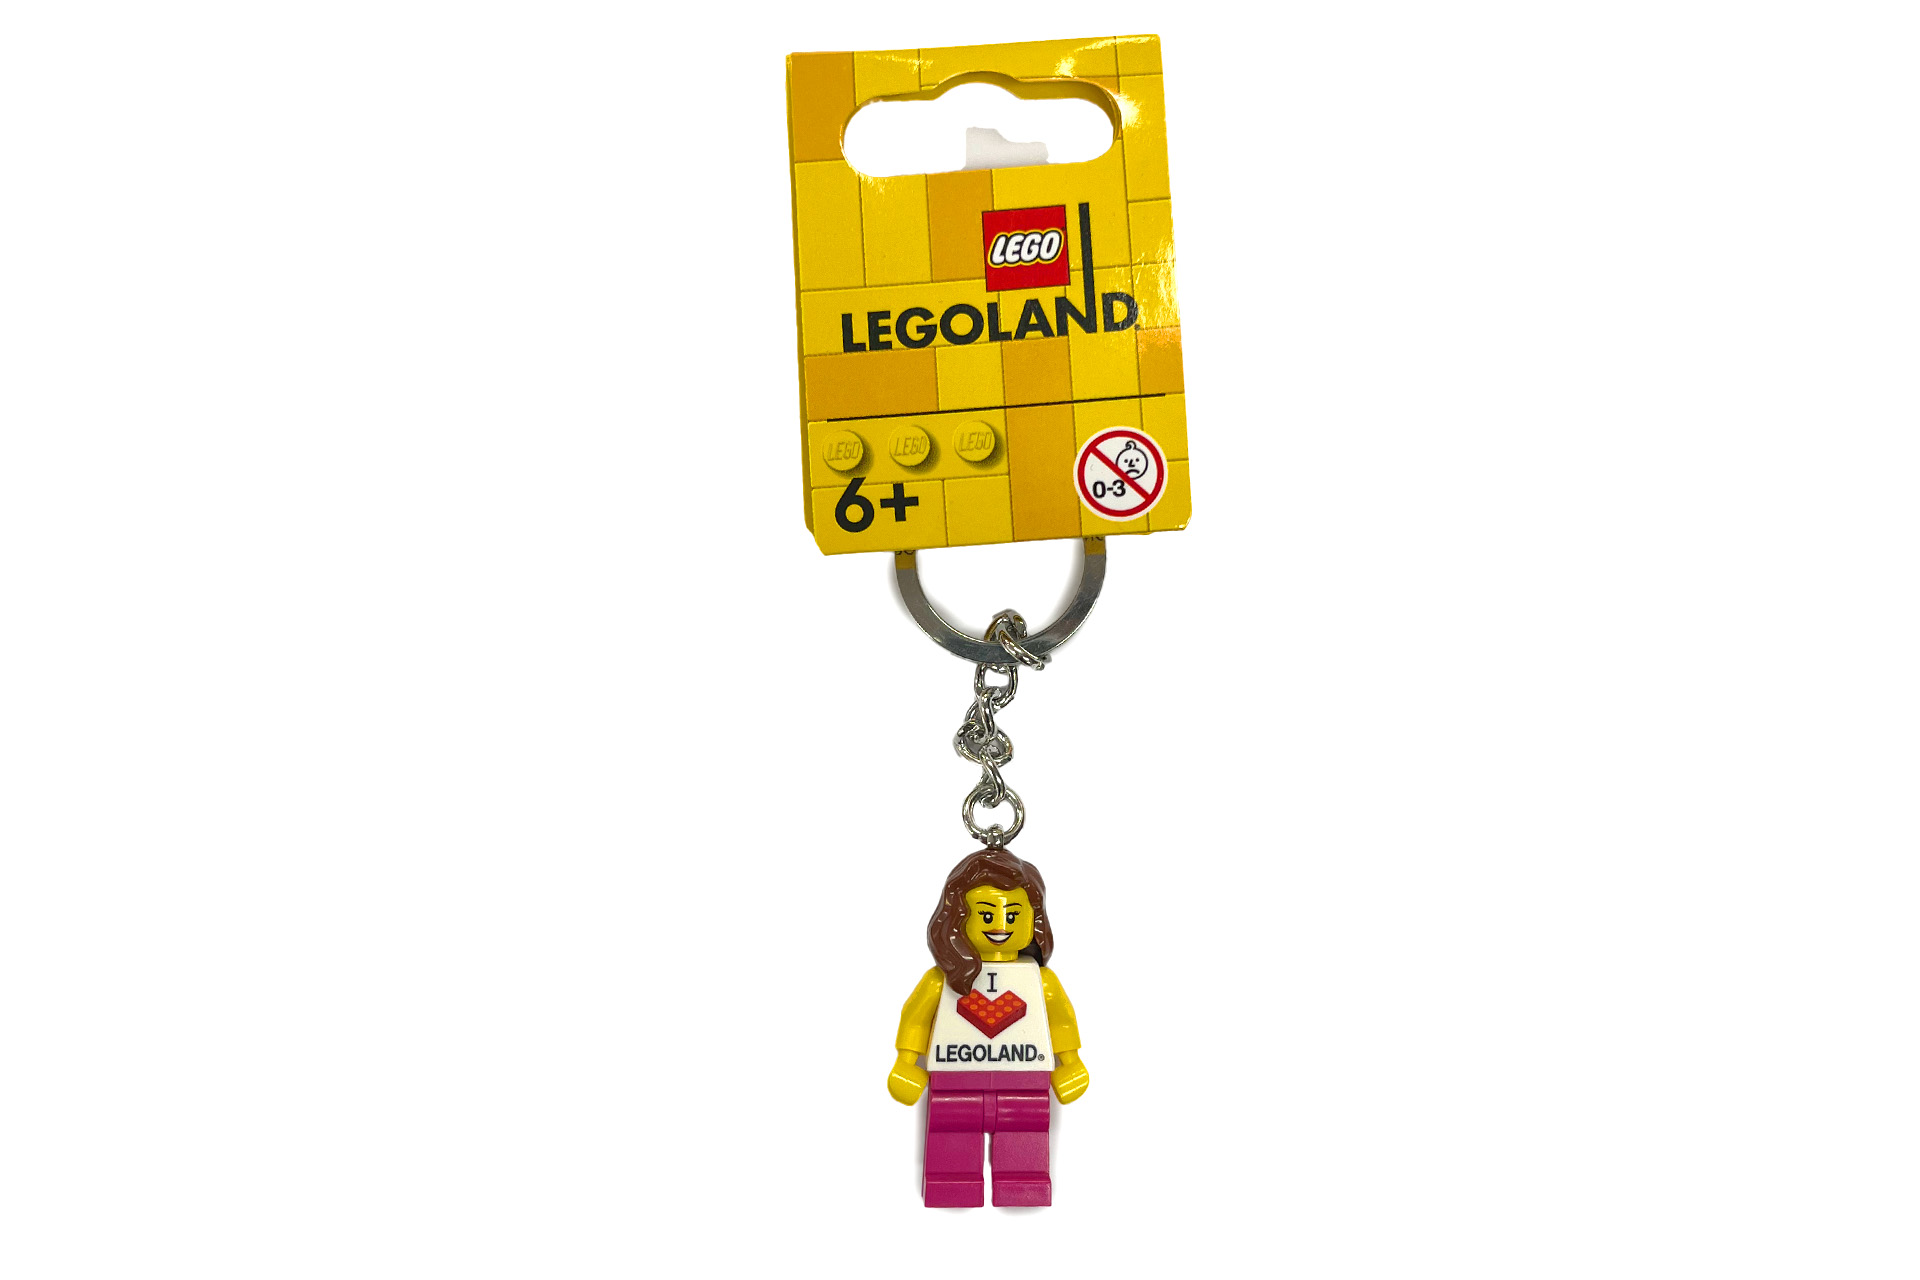 Gespierd Eindeloos Specifiek LEGO 851330 I Love LEGOland sleutelhanger - Unieke Bricks - Passie voor LEGO ®